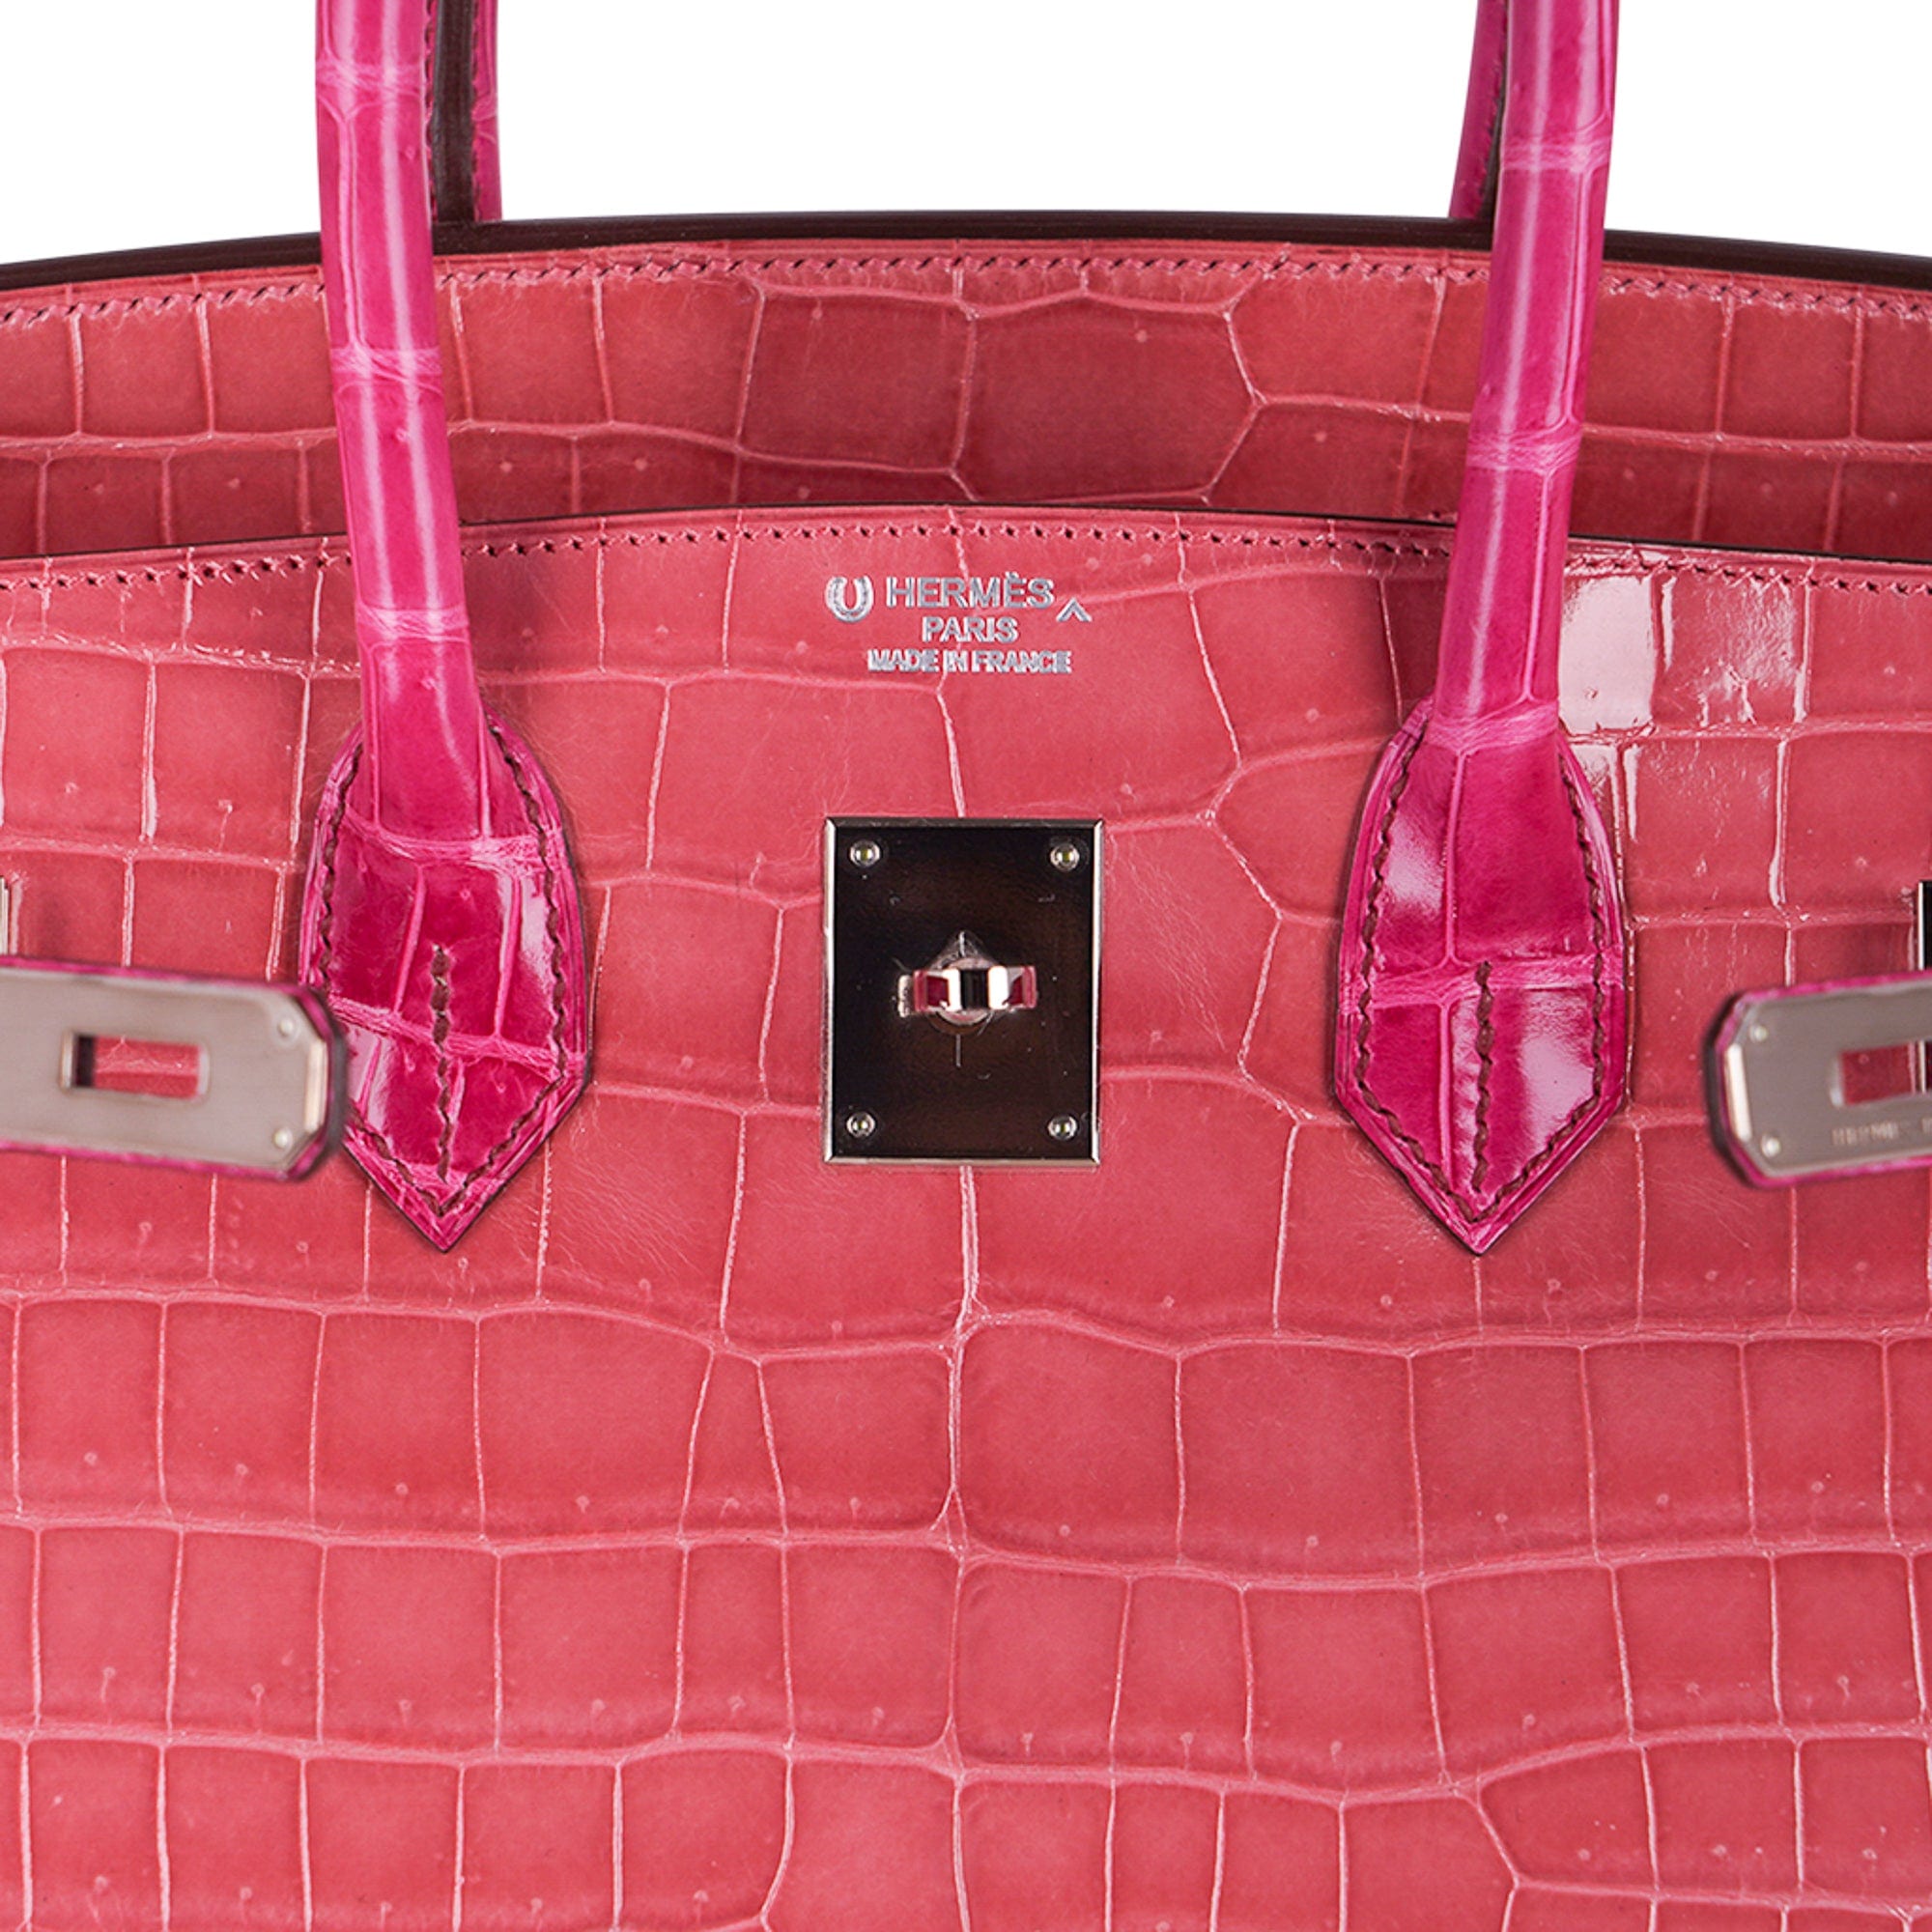 Birkin Bag Pink